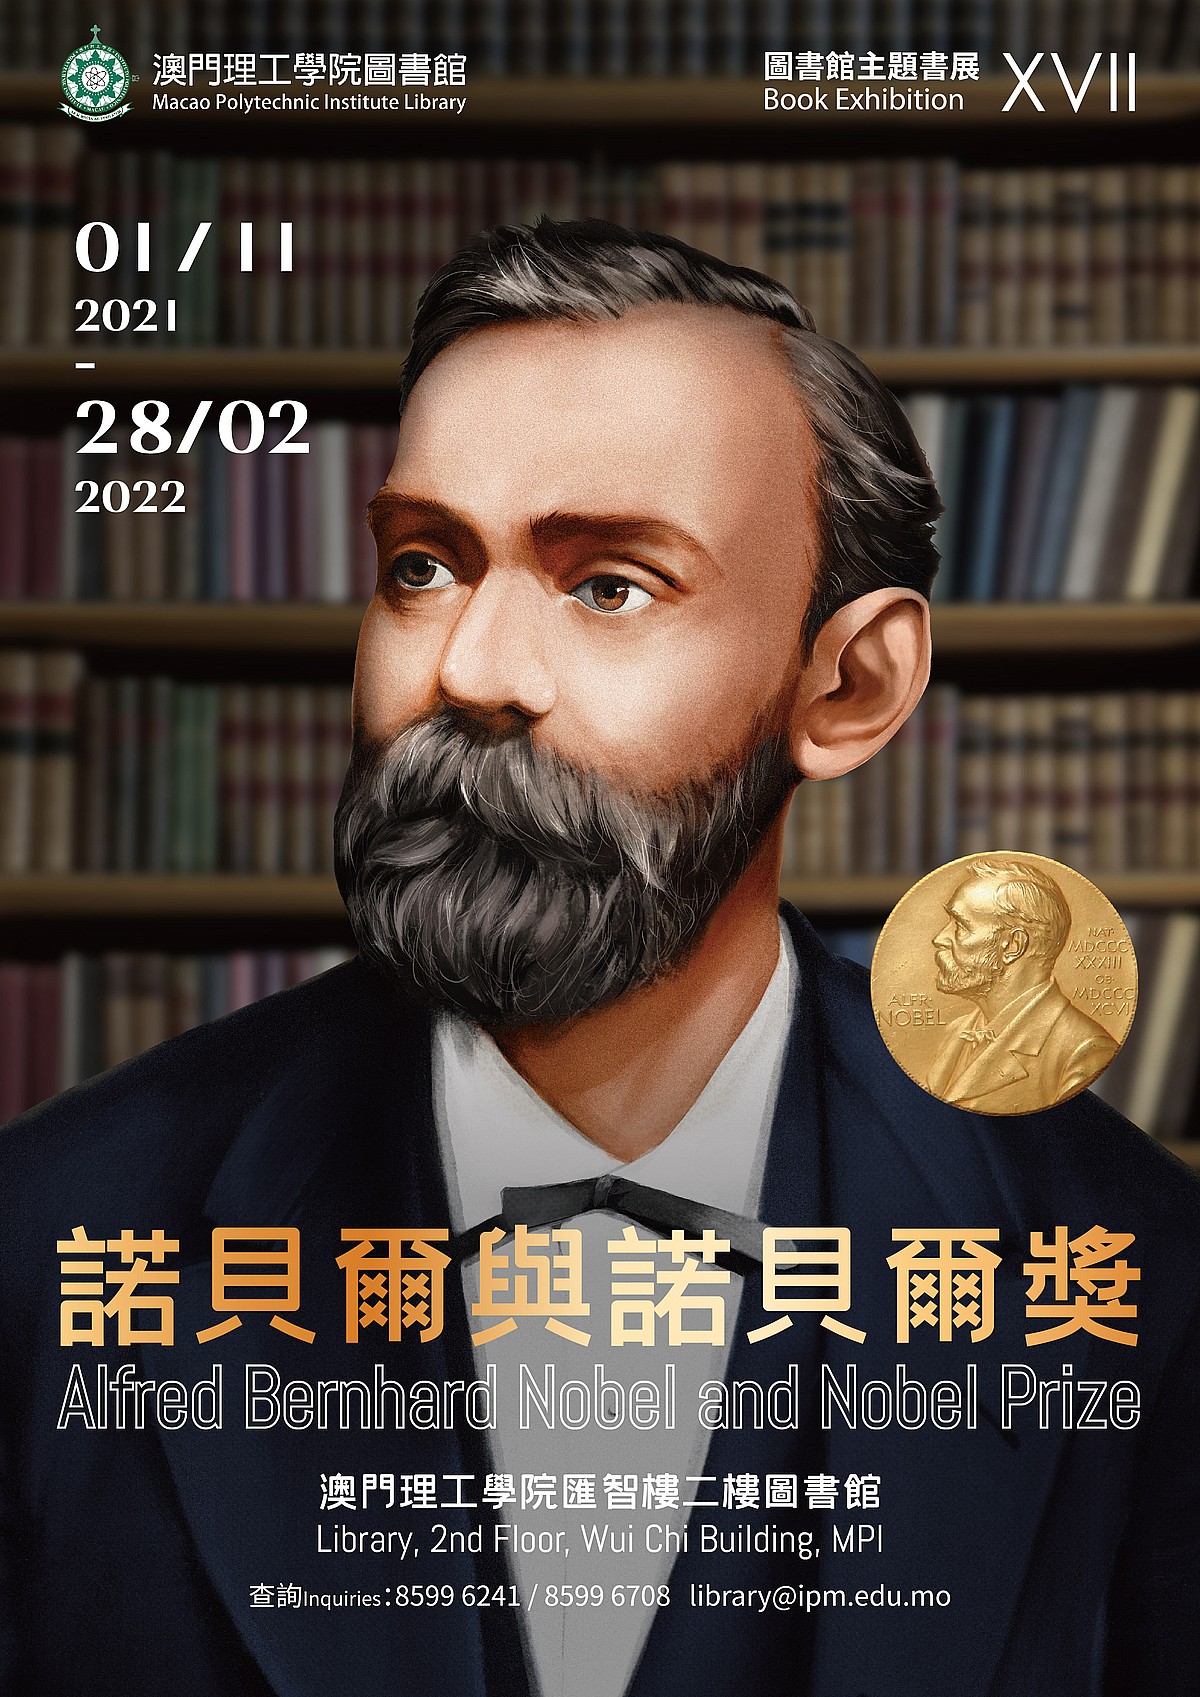 Alfred Bernhard Nobel and Nobel Prize